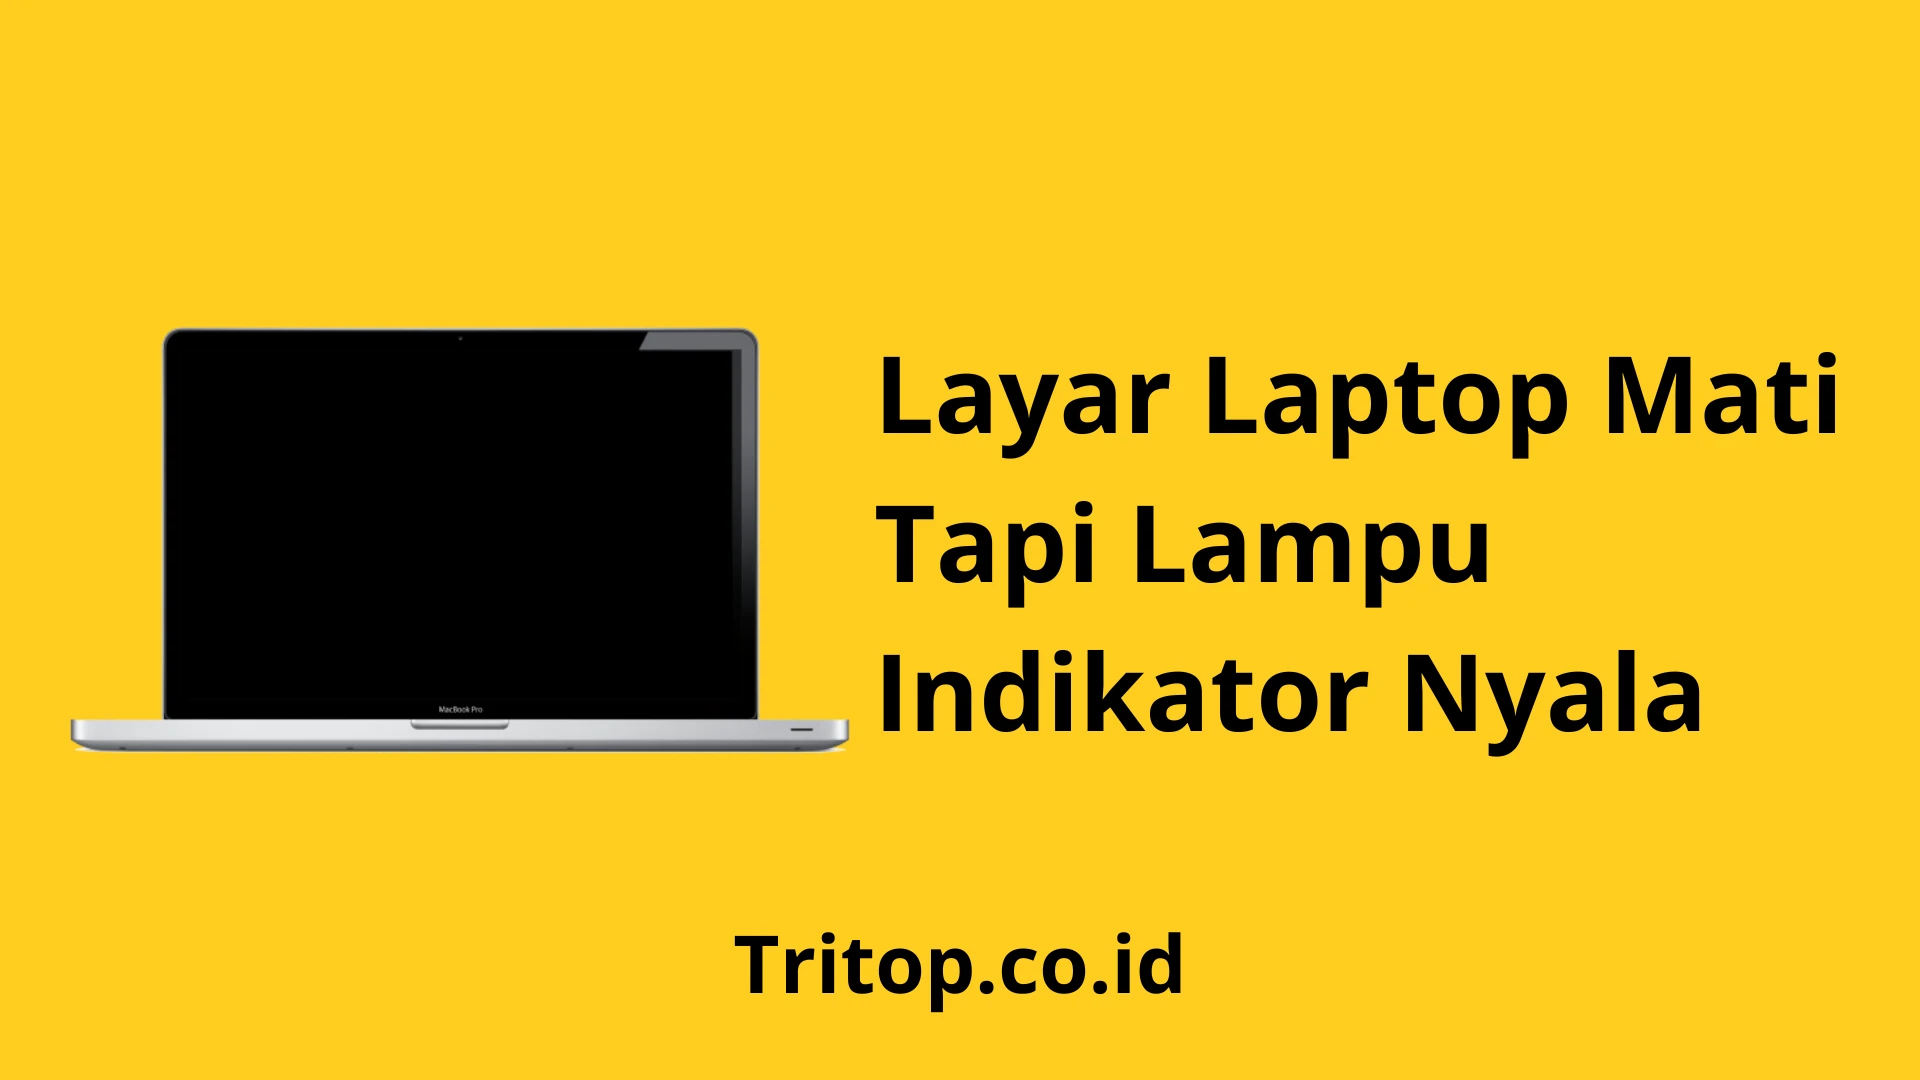 Layar Laptop Mati Tapi Lampu Indikator Nyala Tritop.co.id